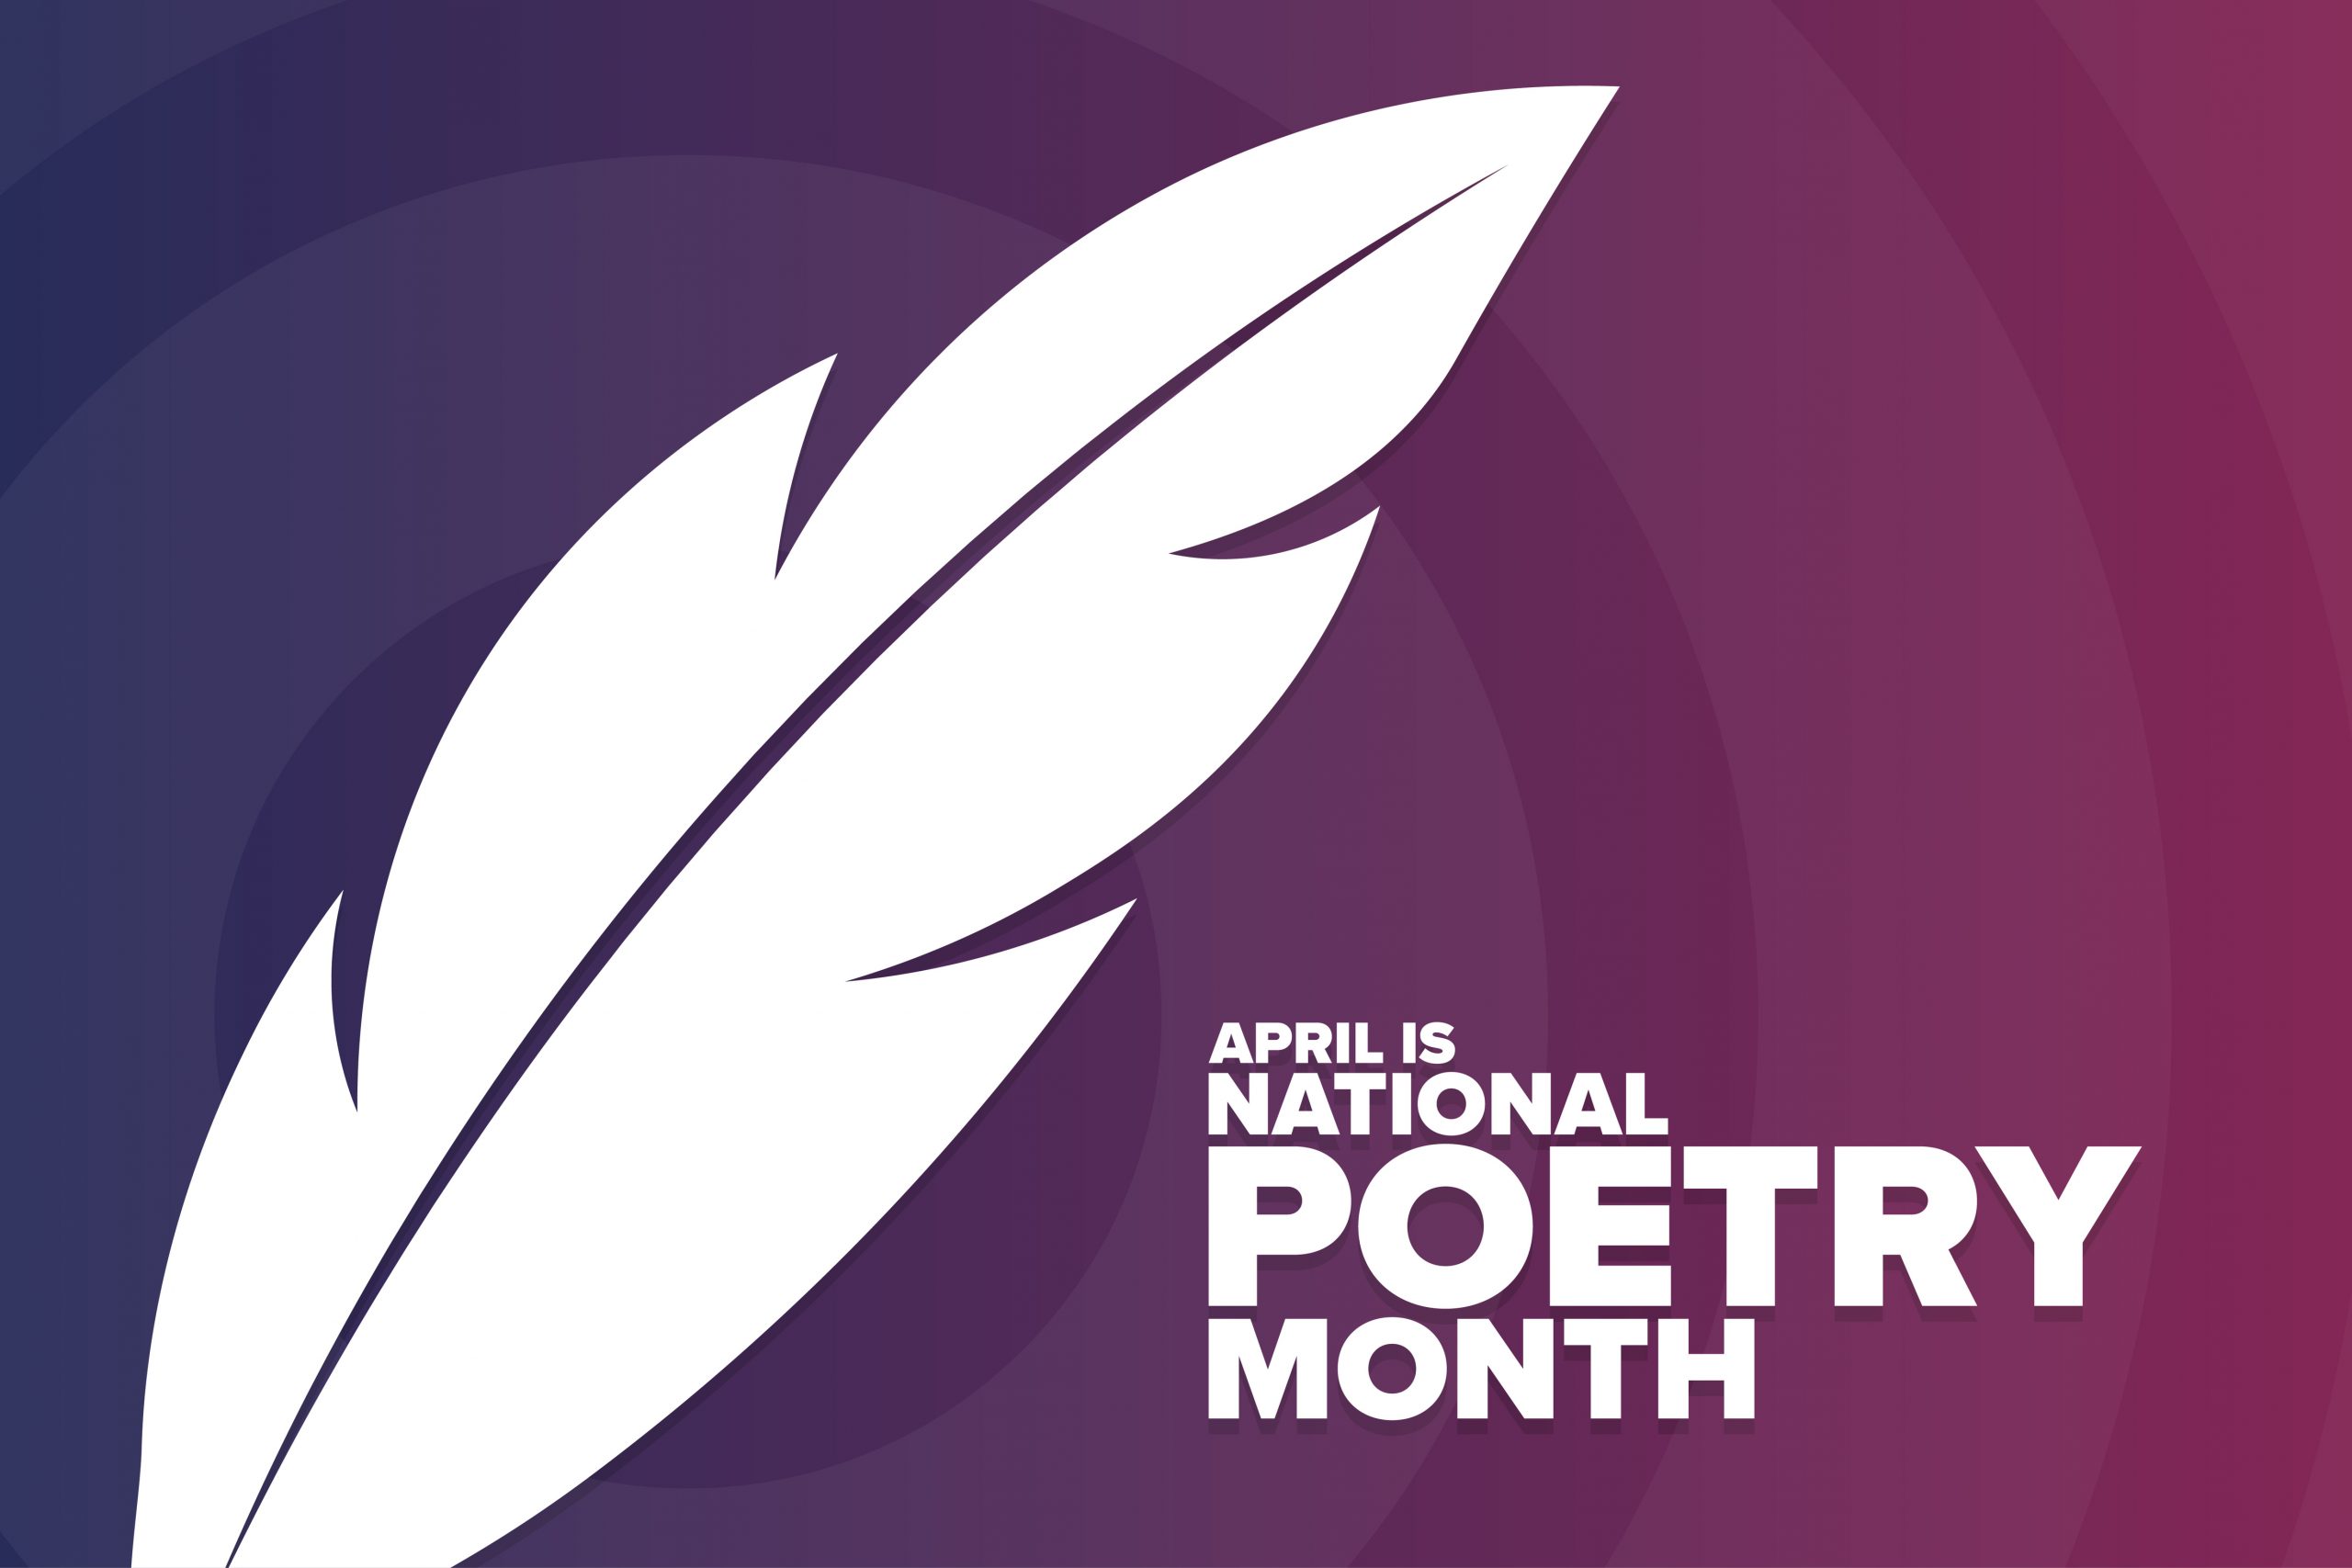 Explore Poetry This April